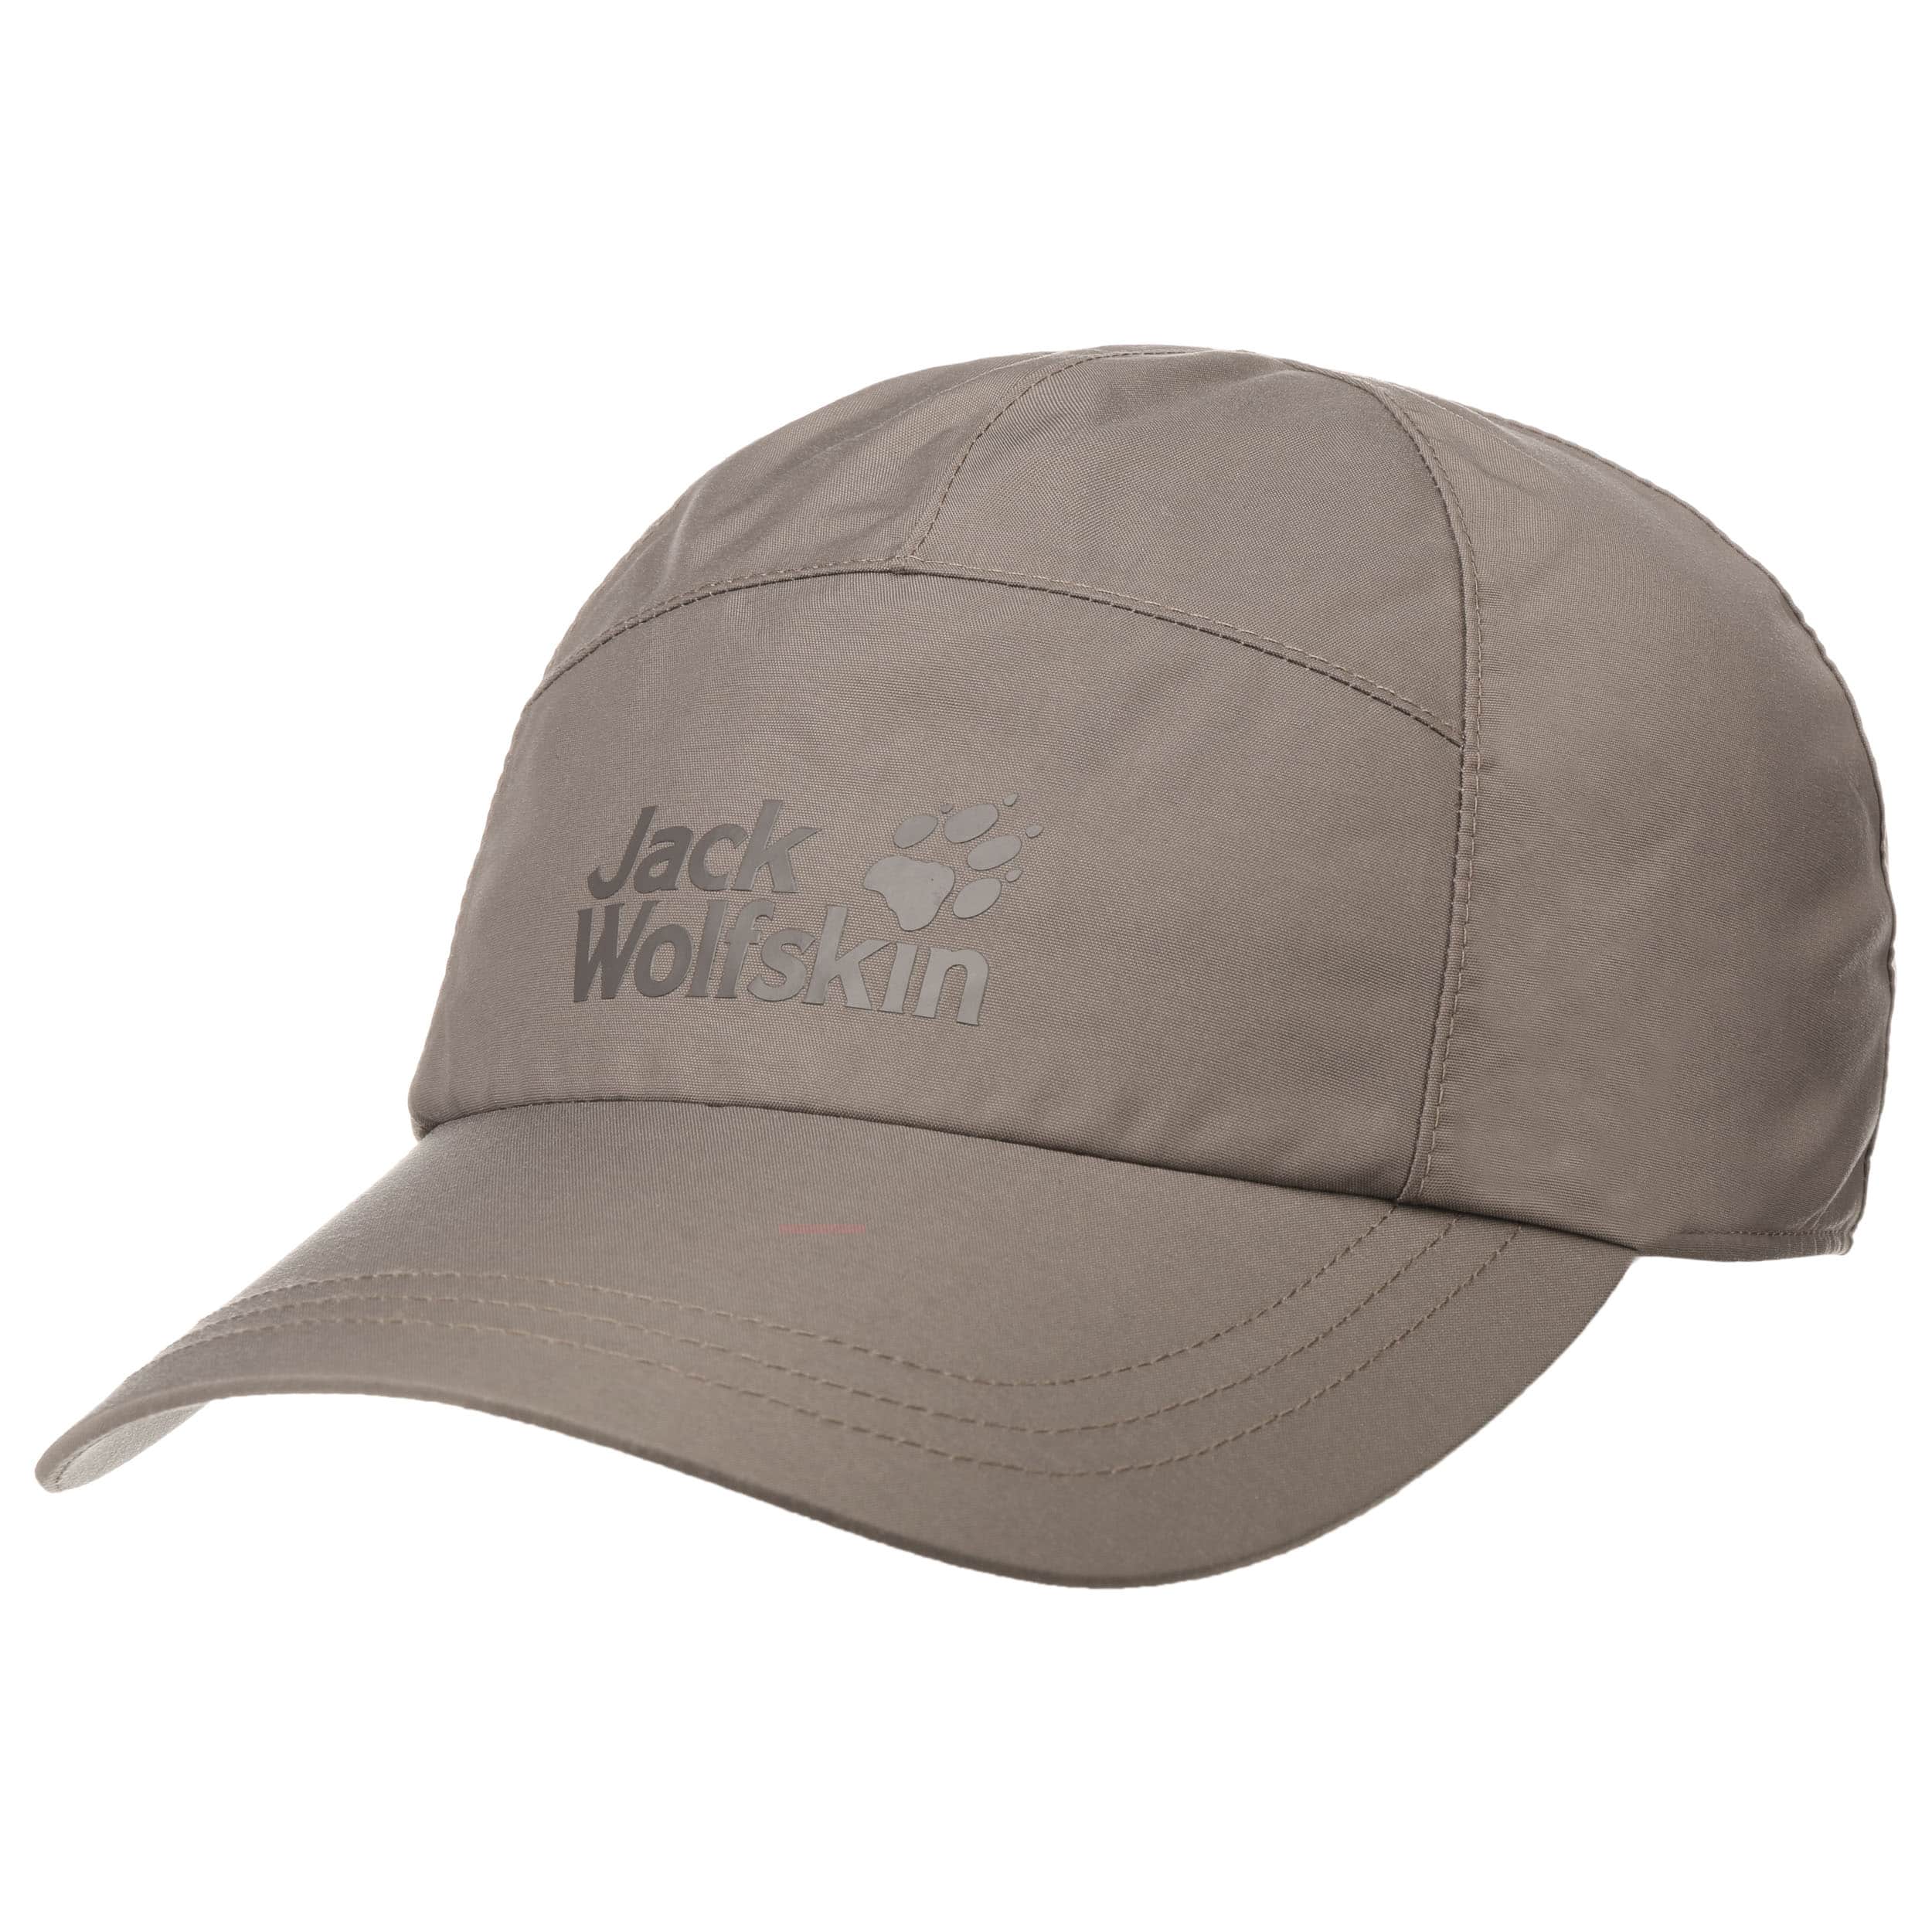 Jack Wolfksin Unisex Baseball Cap Hat Robust Fabric Breathable